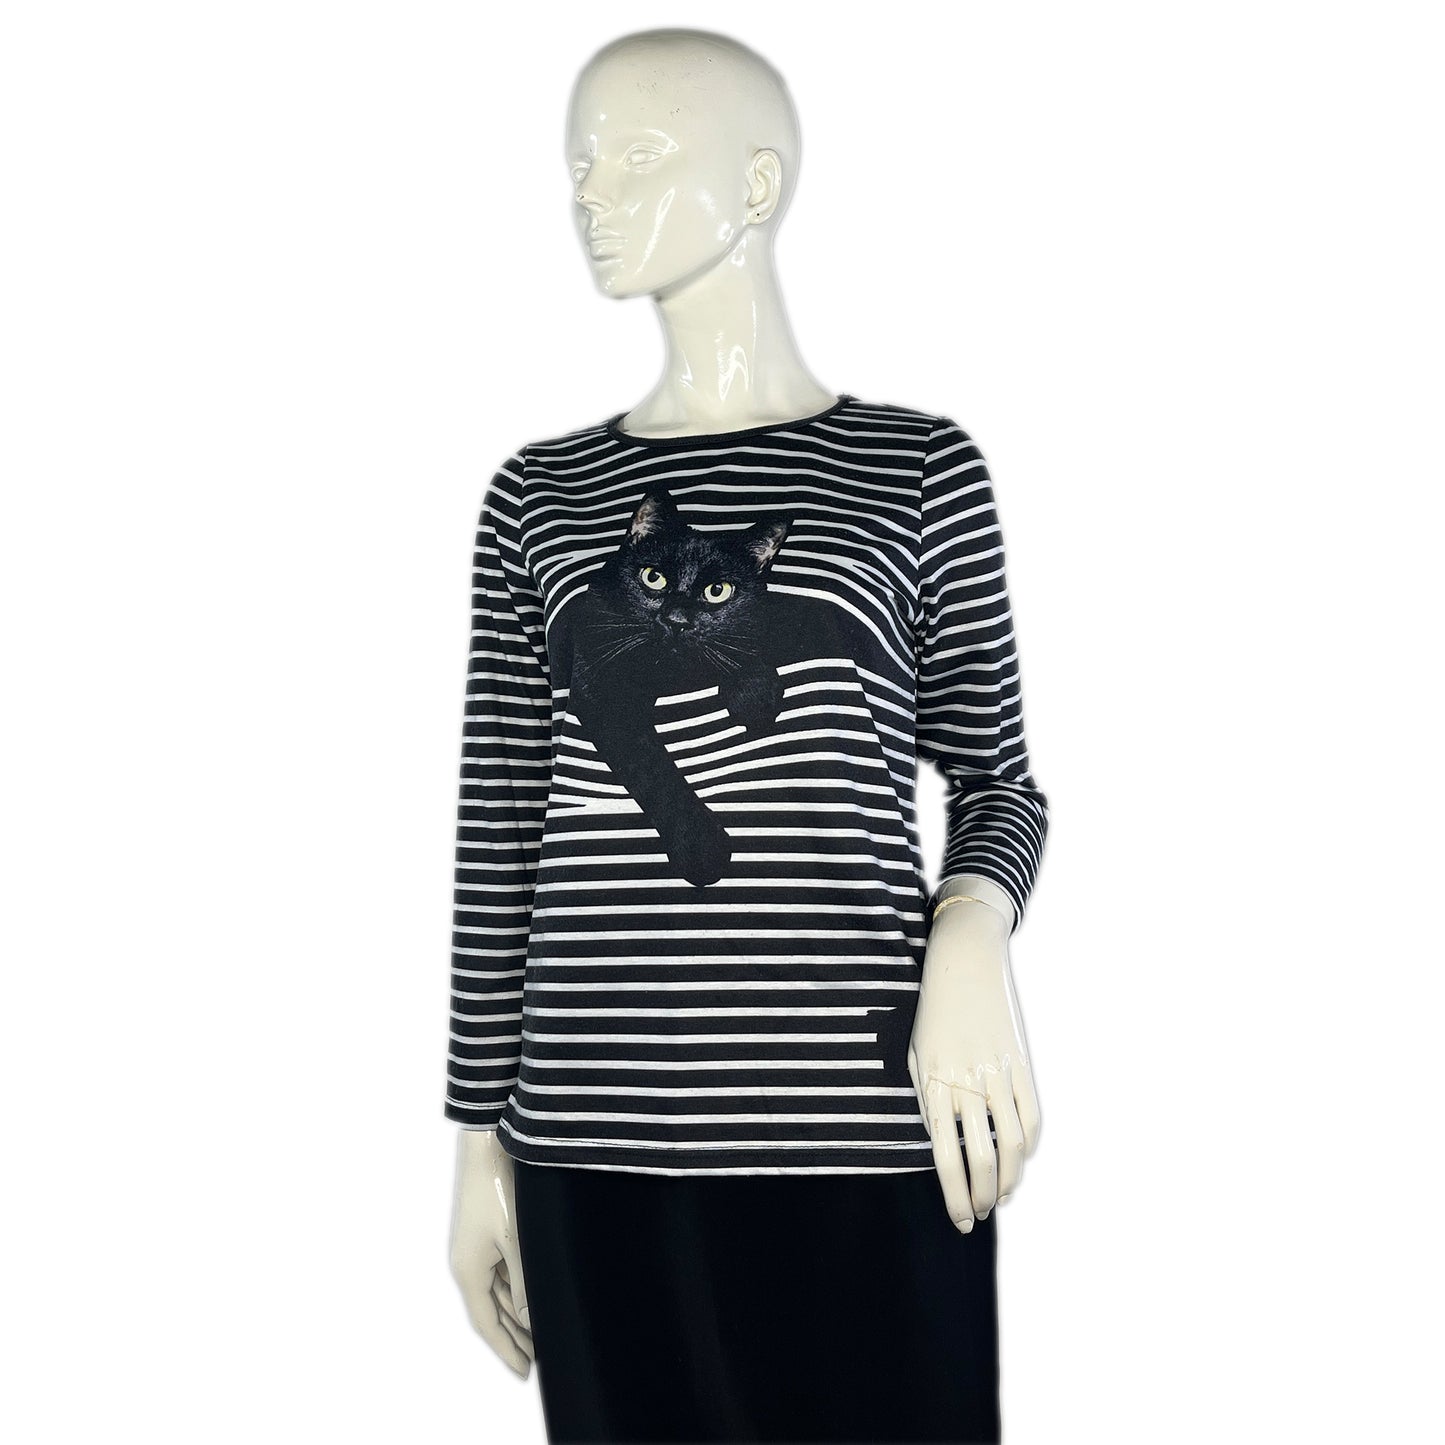 Mislook Top Long Sleeves Stripe Black Cat Black, White Size M SKU 000374-3